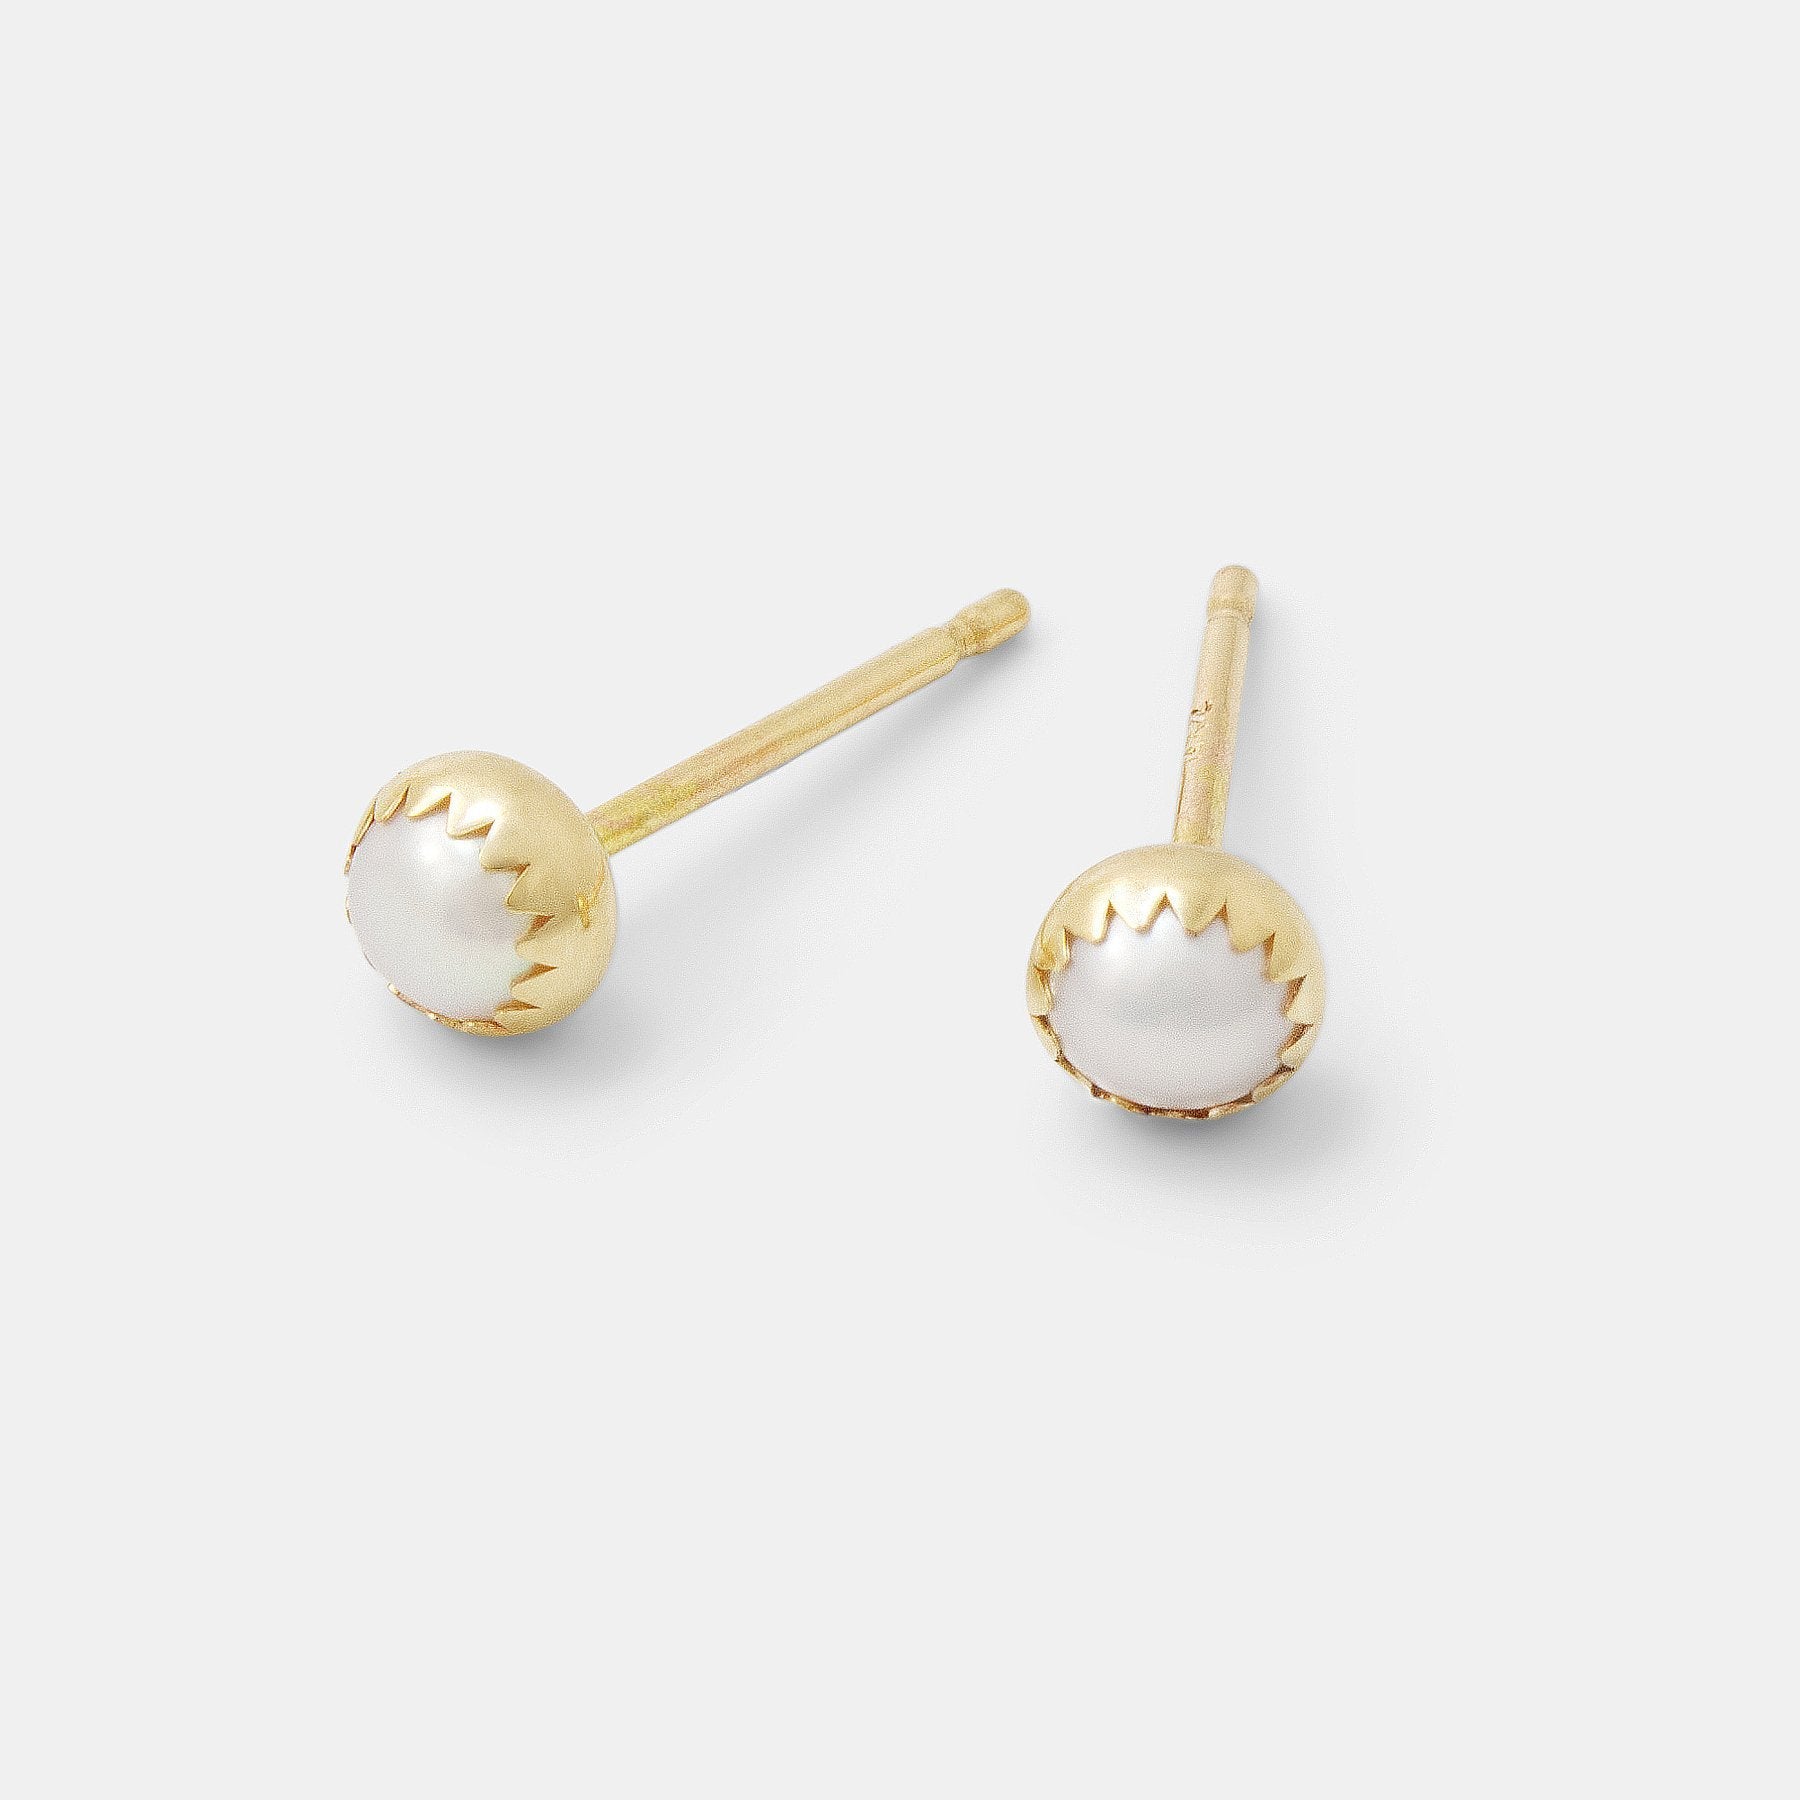 Pearl & solid gold stud earrings - Simone Walsh Jewellery Australia